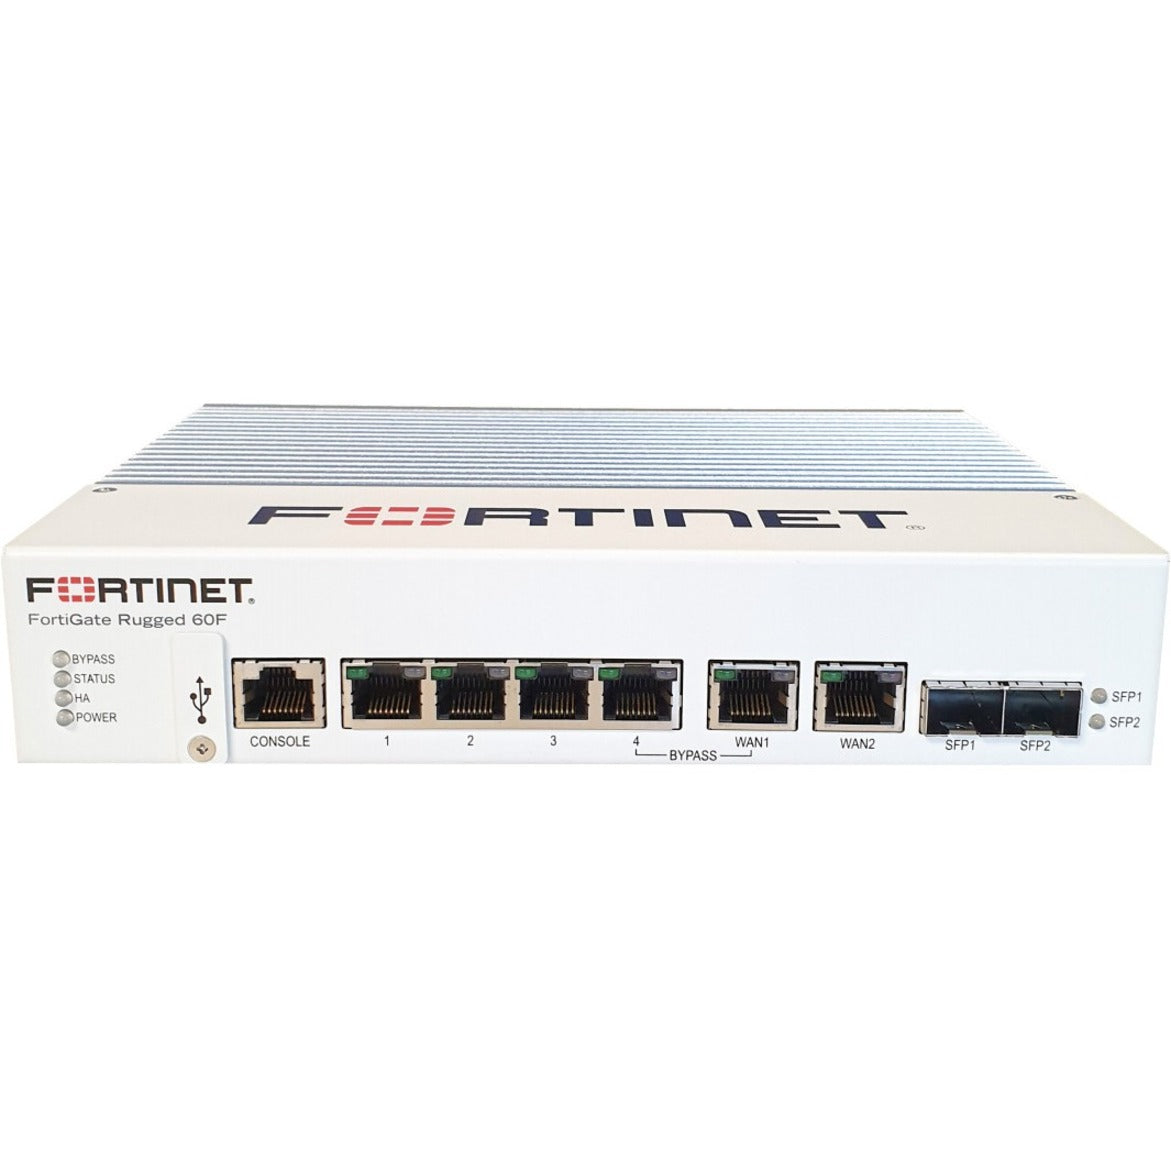 Fortinet FGR-60F FortiGate Rugged Network Security/Firewall Appliance, 6 Ports, Gigabit Ethernet, AES (256-bit) Encryption